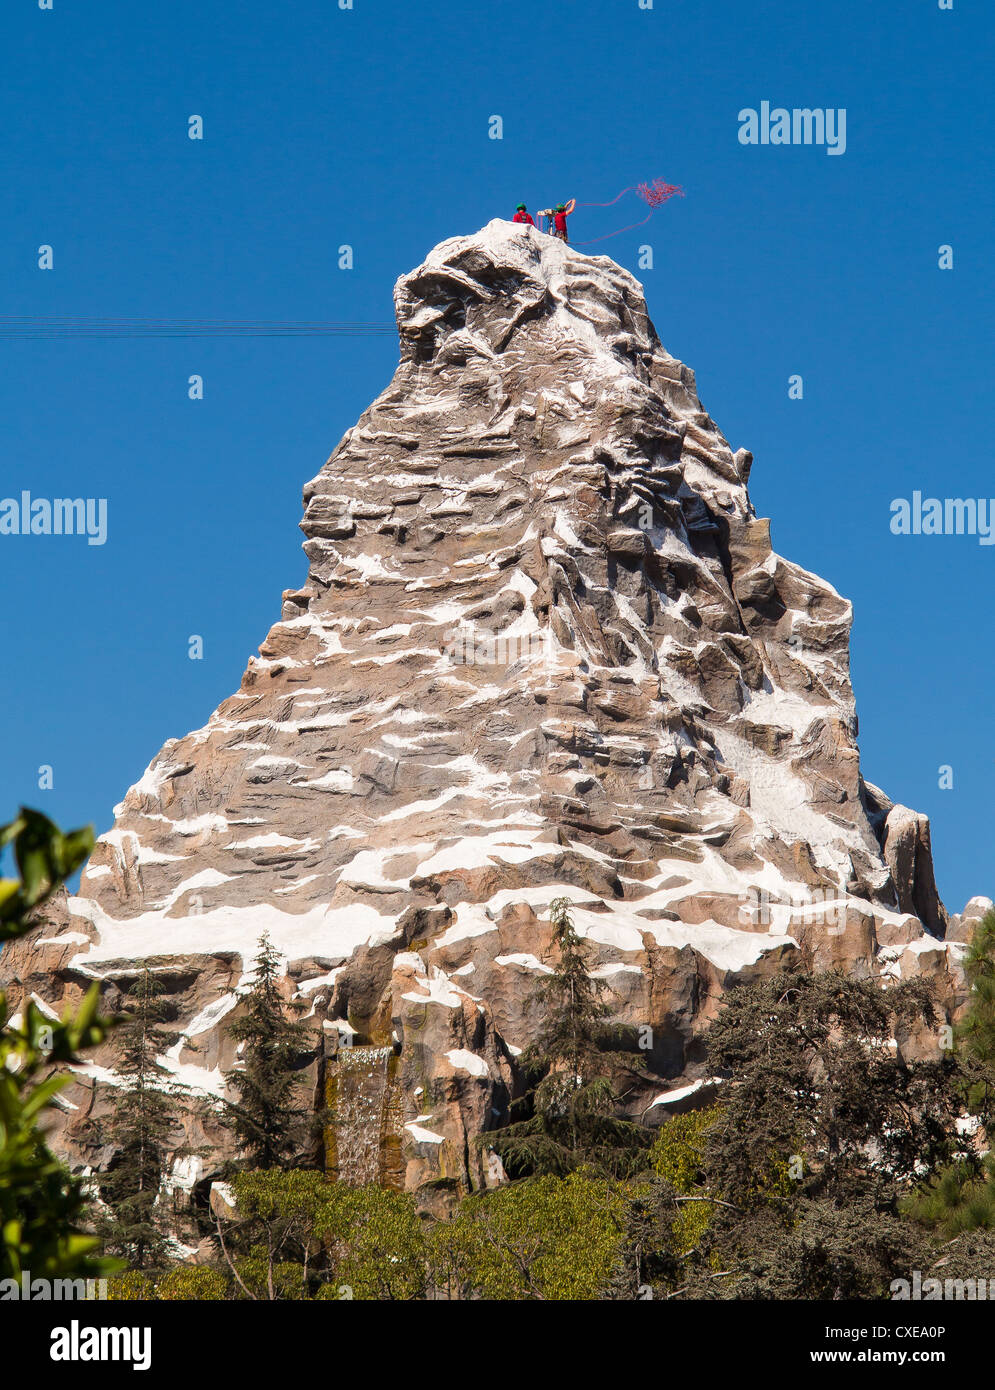 ANAHEIM, CALIFORNIA, USA - The Matterhorn attraction at Disneyland amusement park Stock Photo